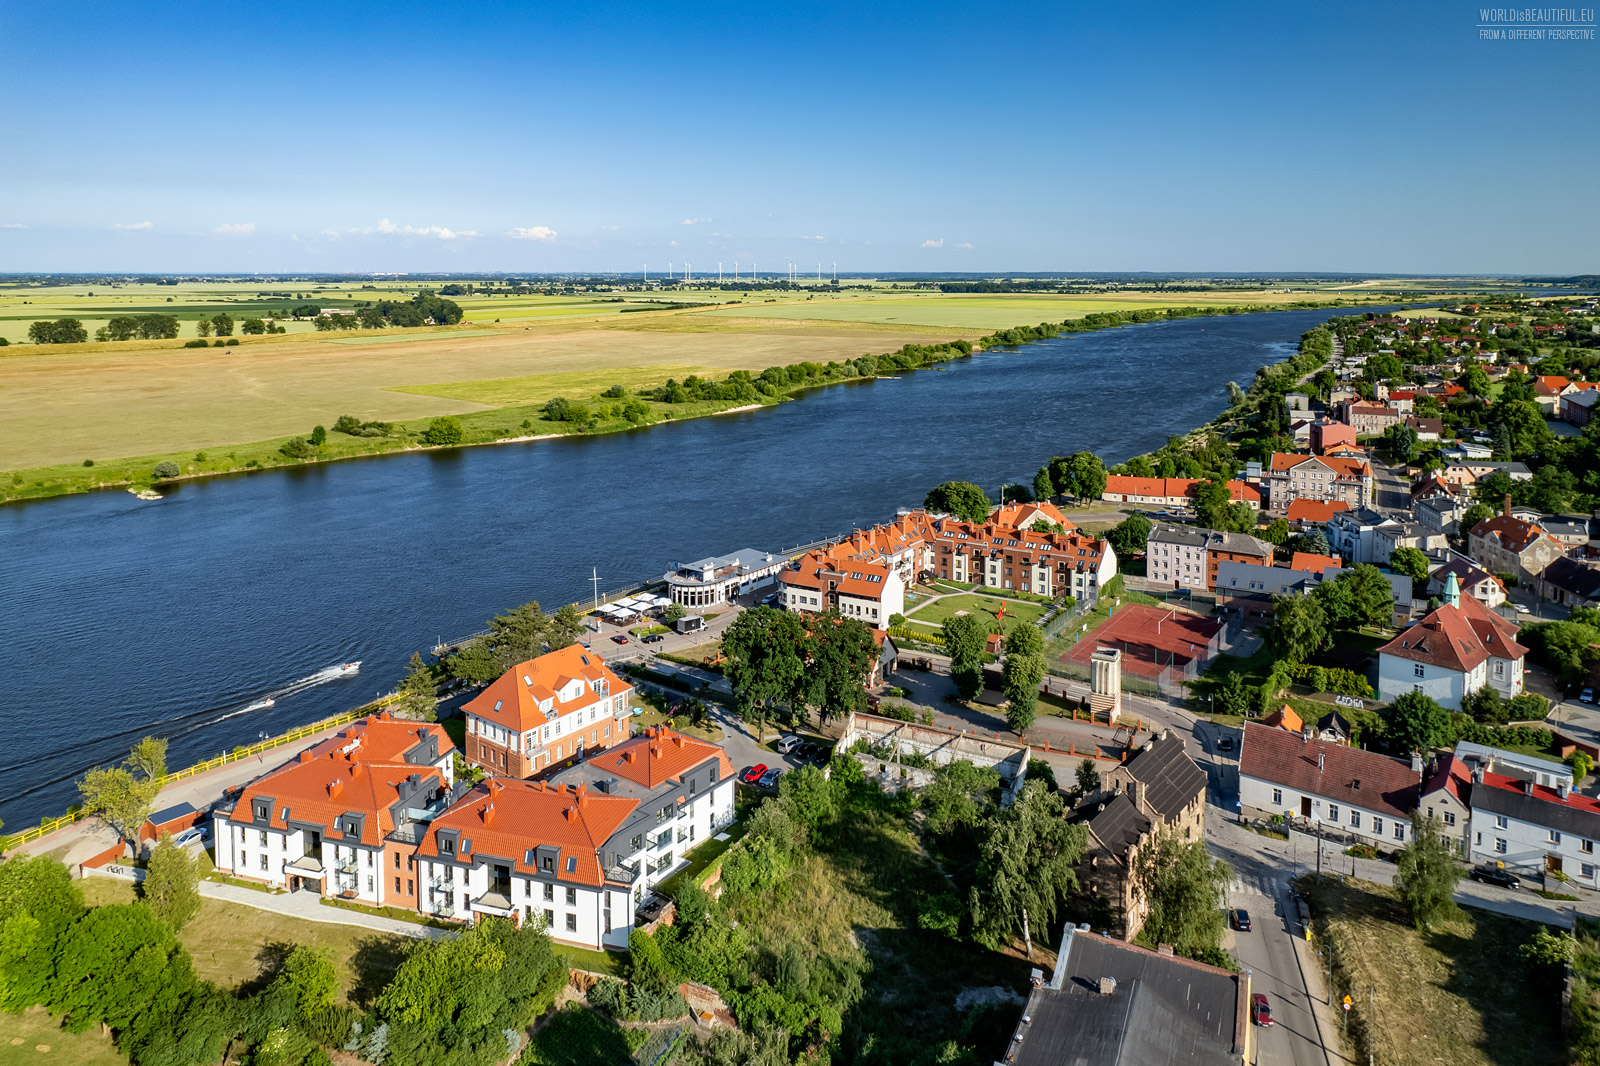 The Vistula River in Tczew